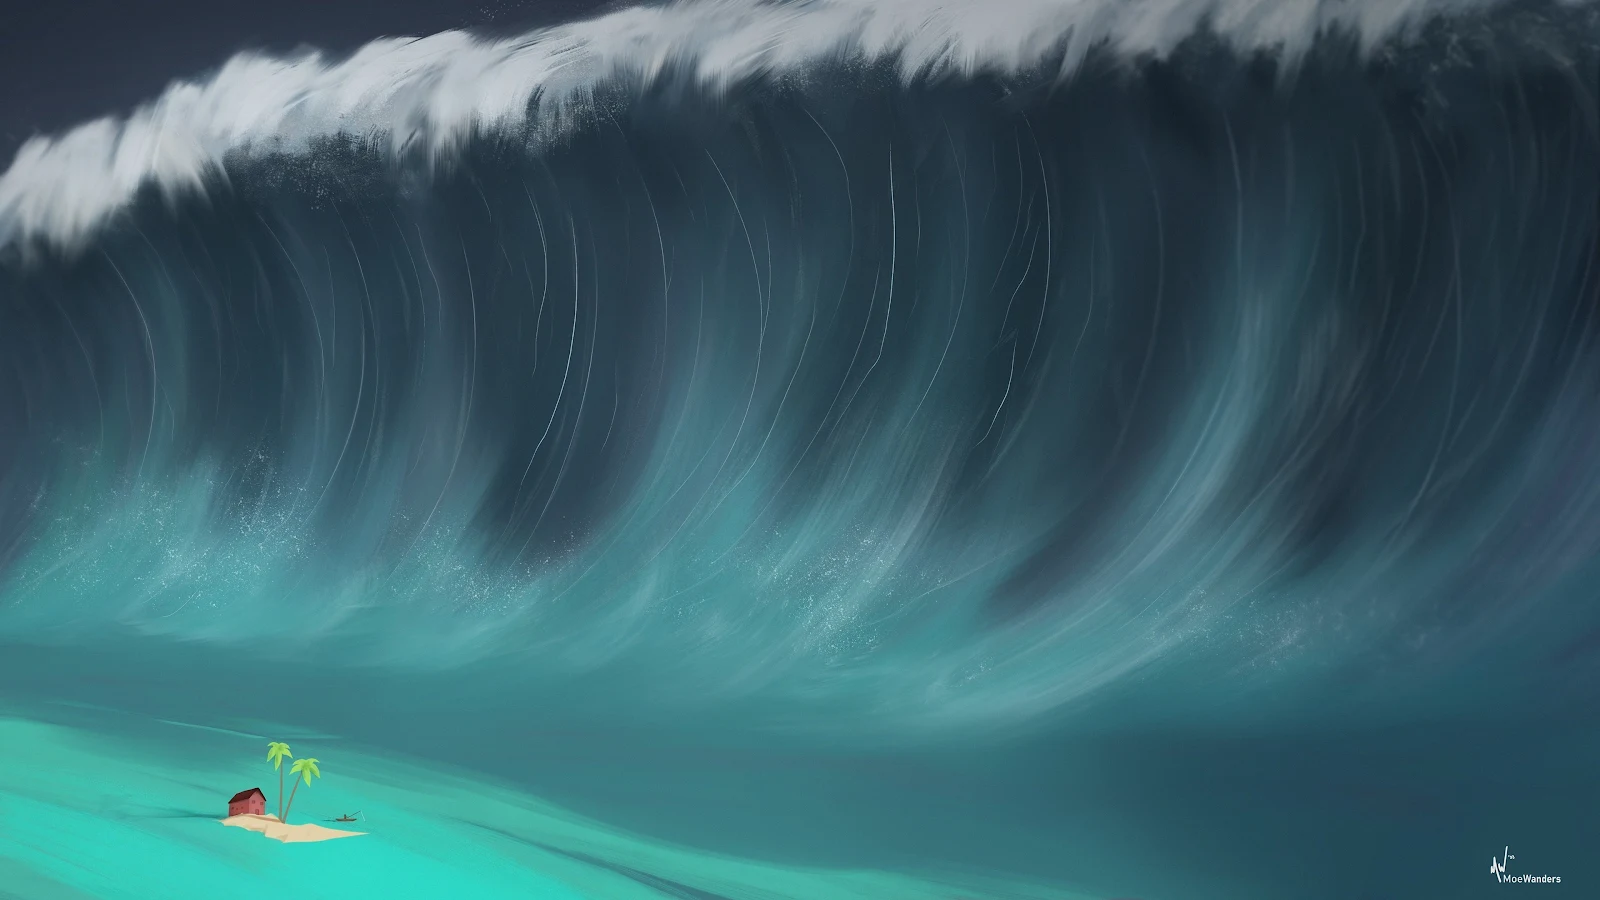 Digital Art, Tsunami, Waves, Palm Trees, Fisherman 4K Desktop, iPhone Wallpaper Background